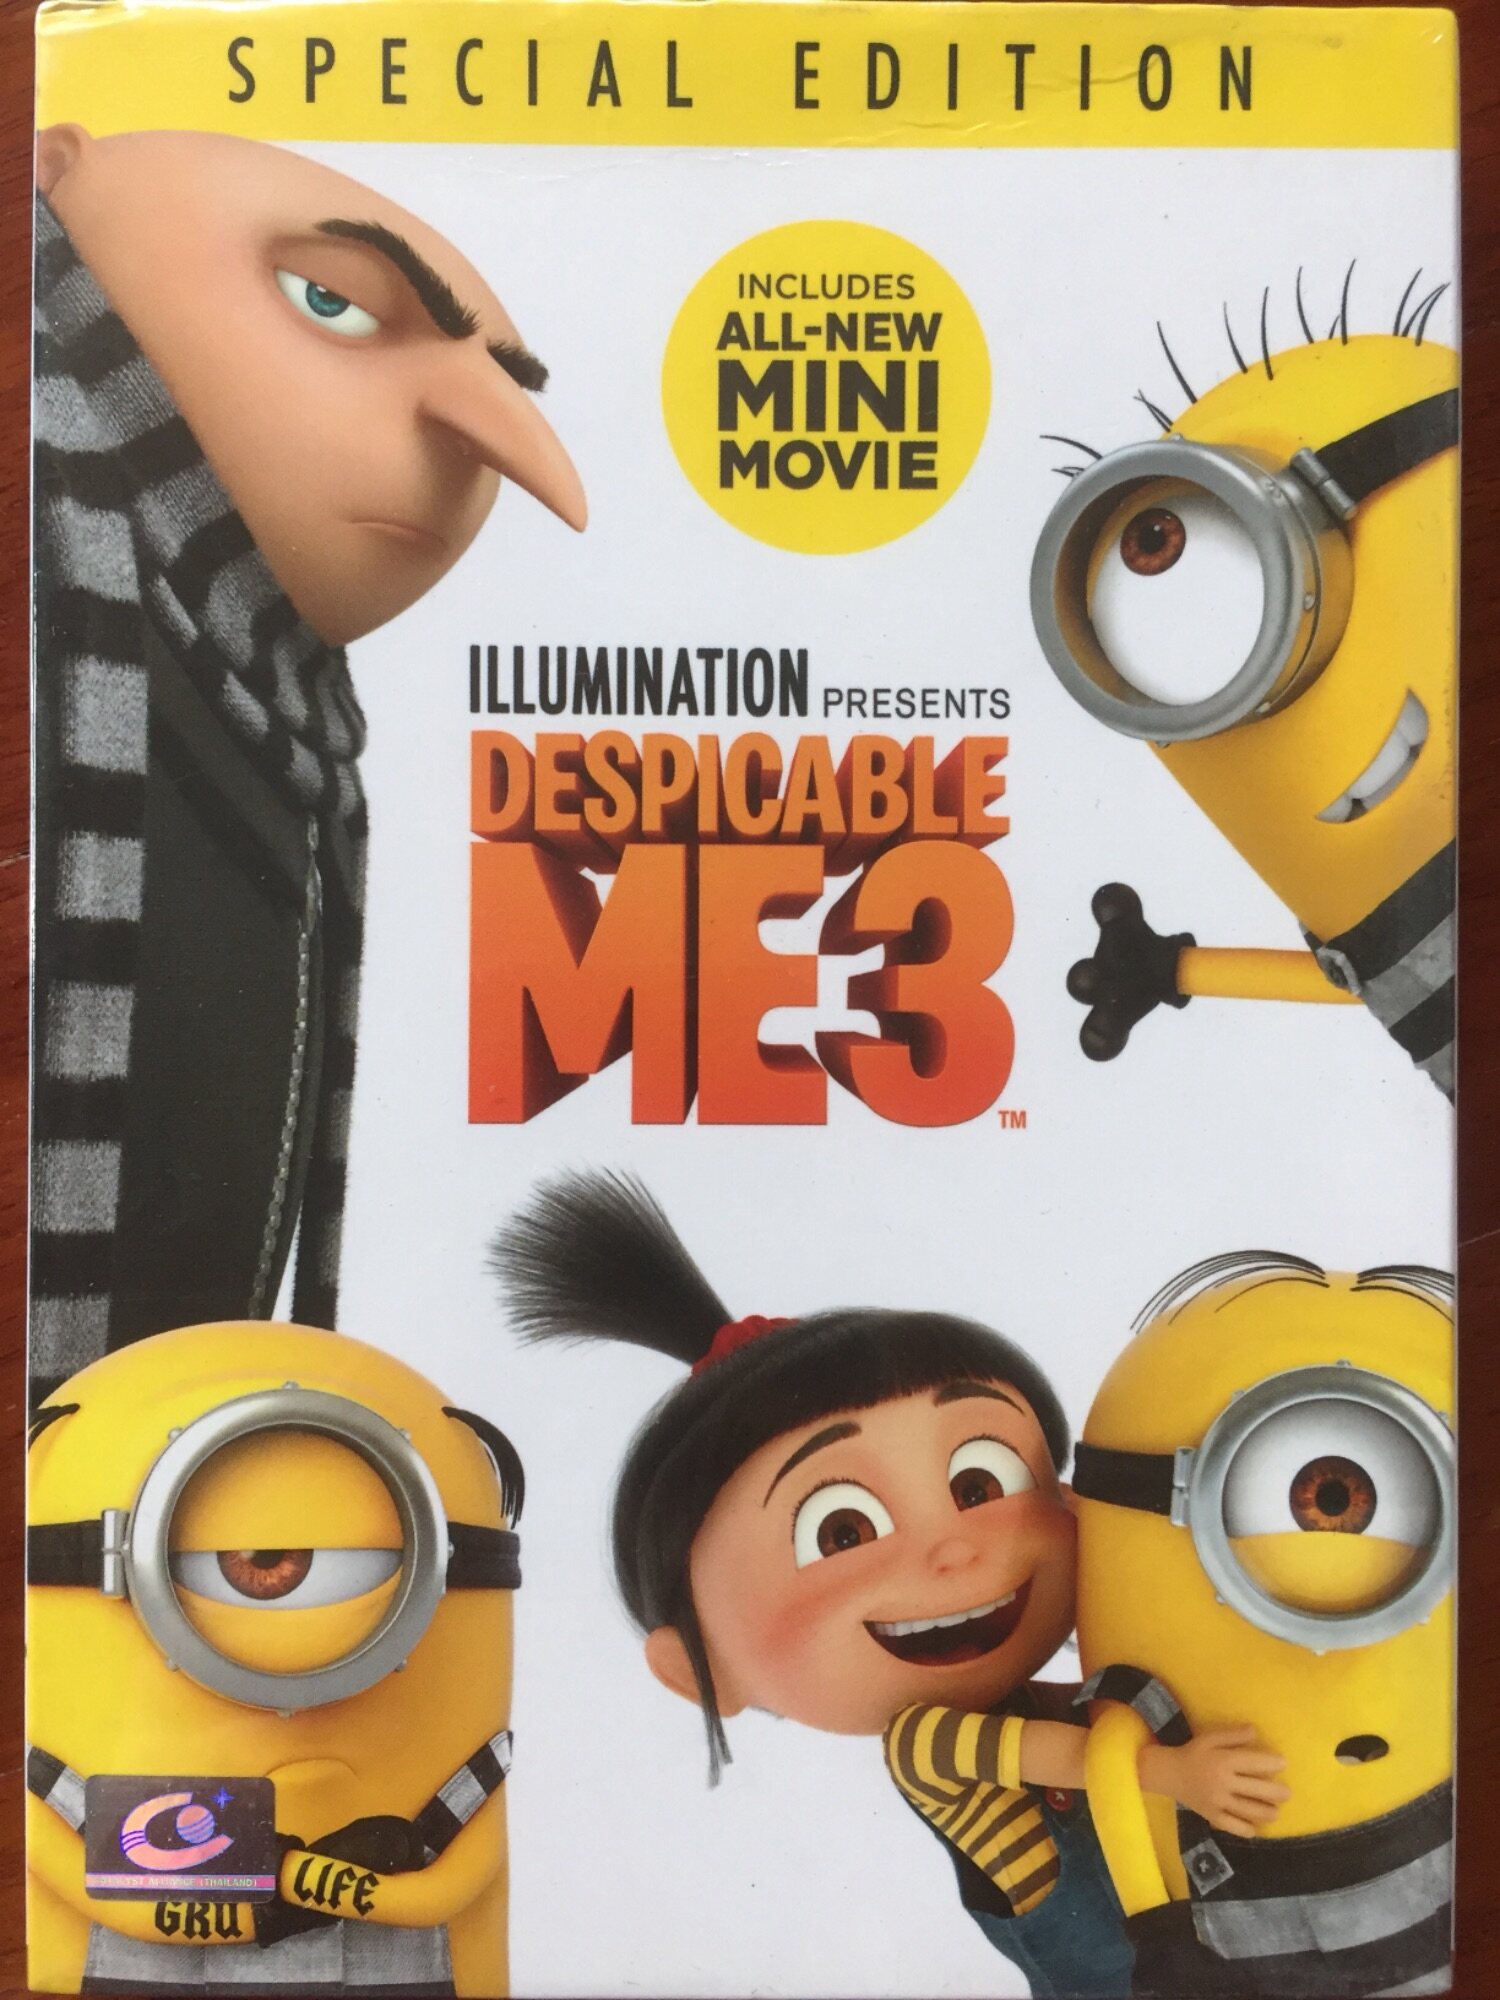 Despicable Me 3(DVD)/มิสเตอร์แสบ ร้ายเกินพิกัด 3 (ดีวีดี)